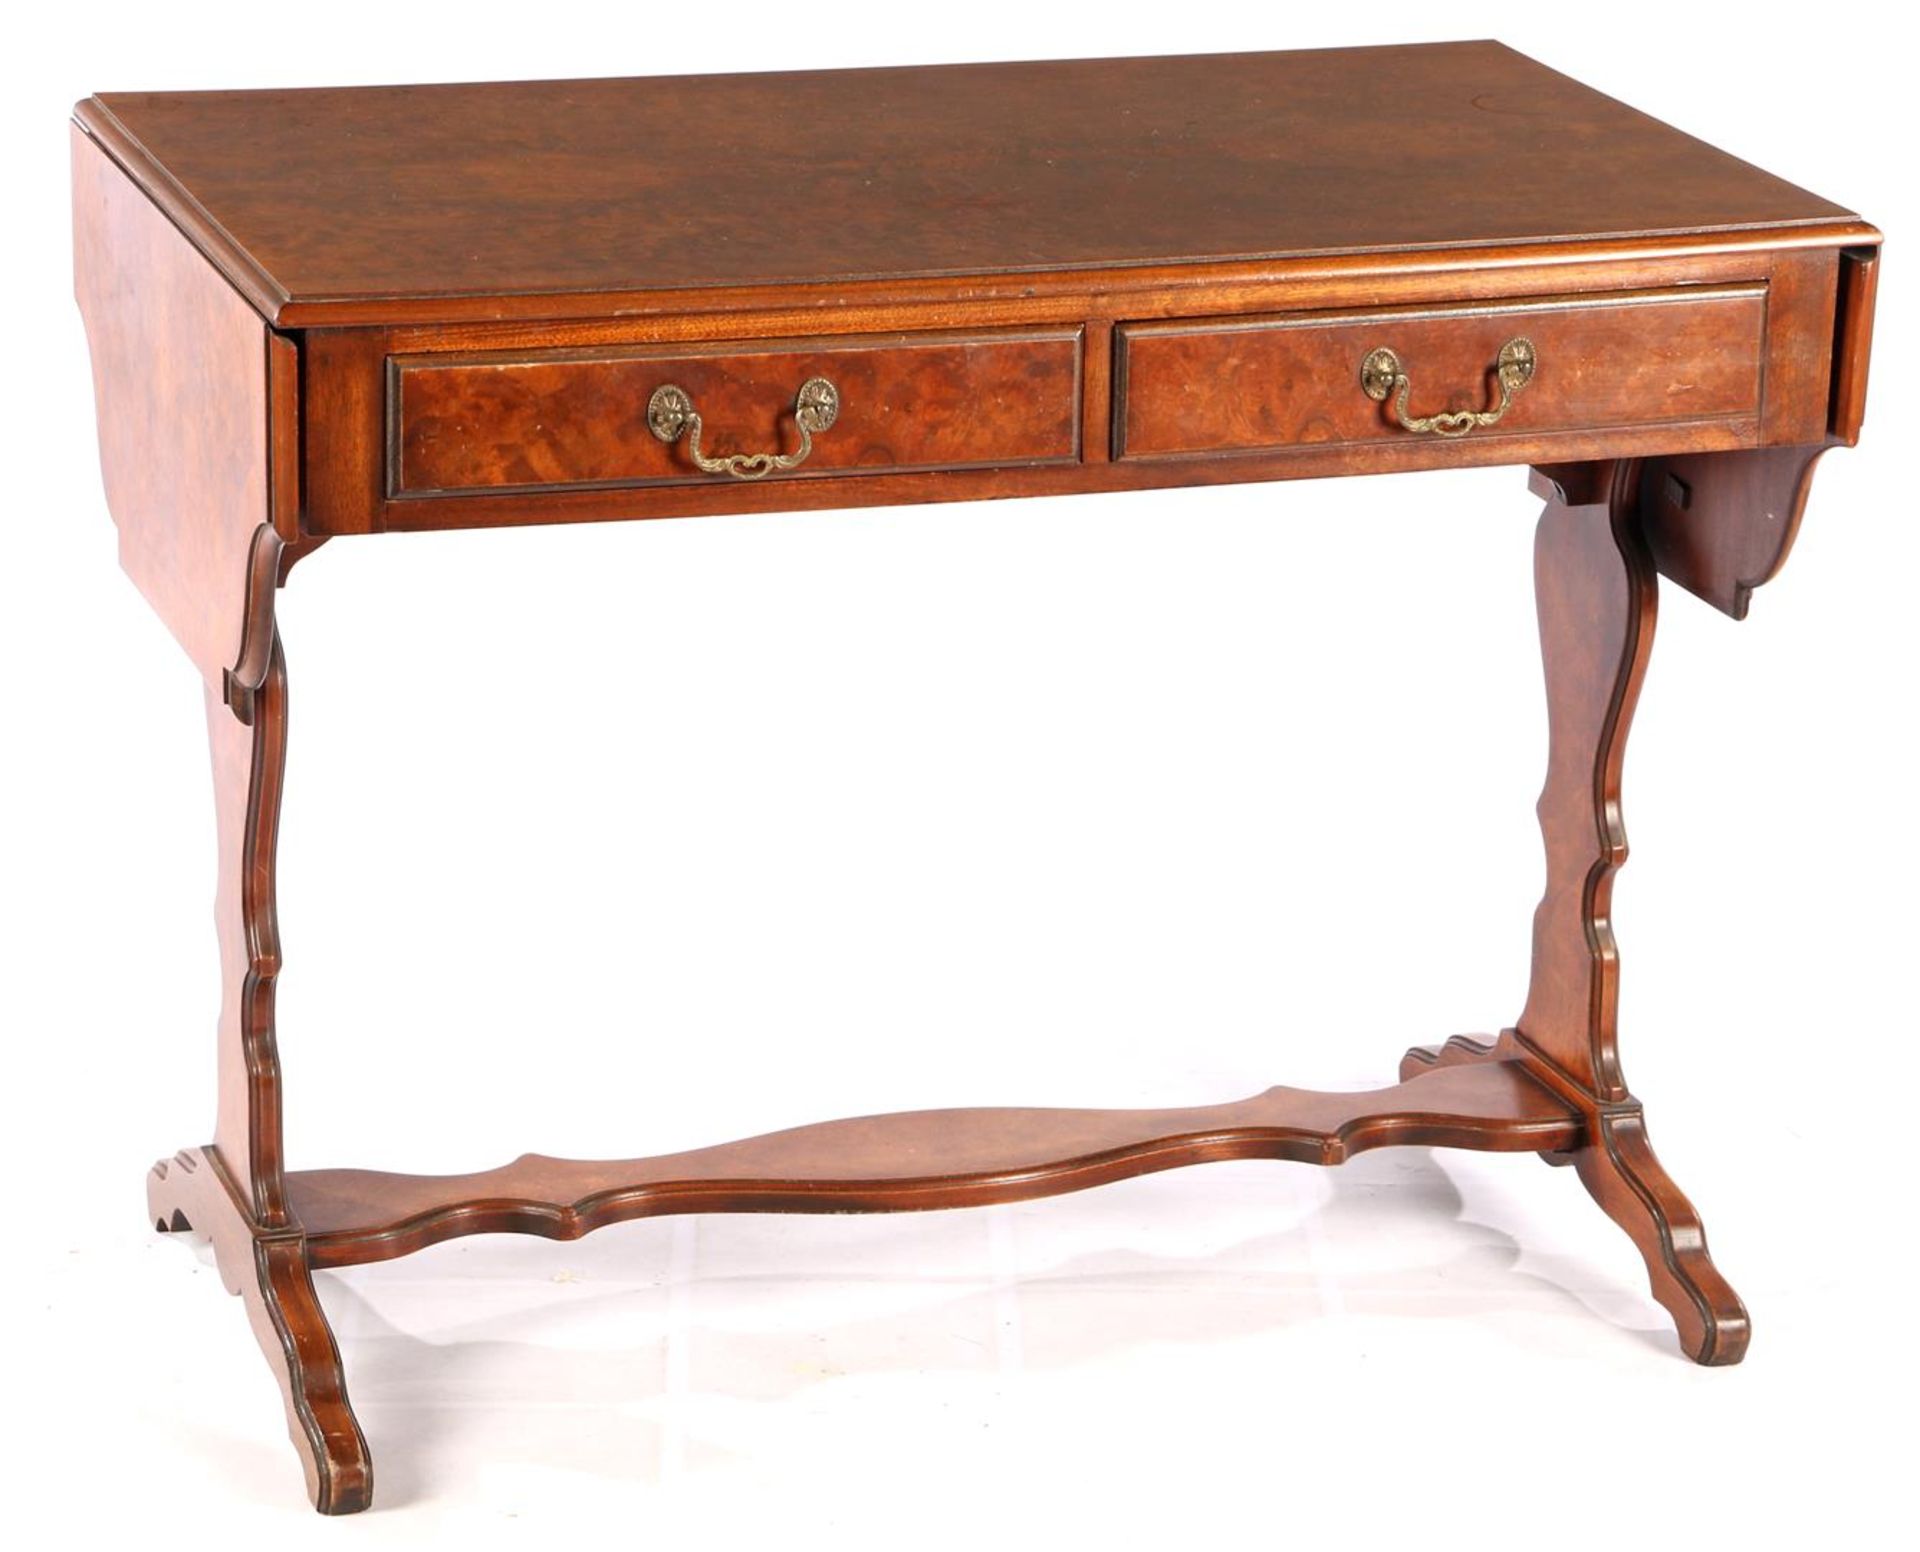 Walnut veneer writing table with 2 drawers, 74 cm high, 96x59 cm with a folding leaf of 26 cm each